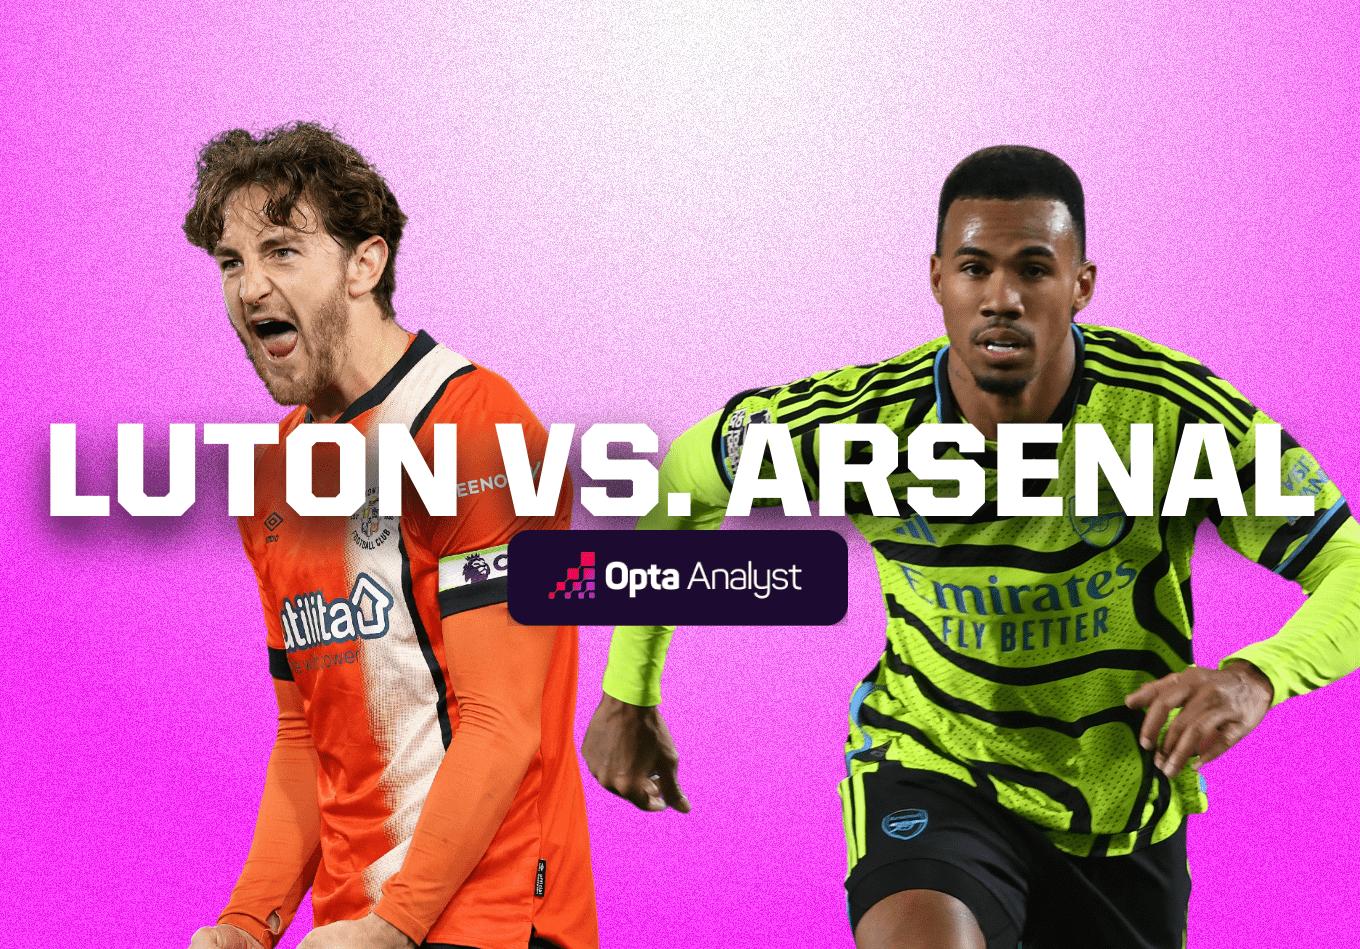 Luton vs Arsenal: Prediction and Preview